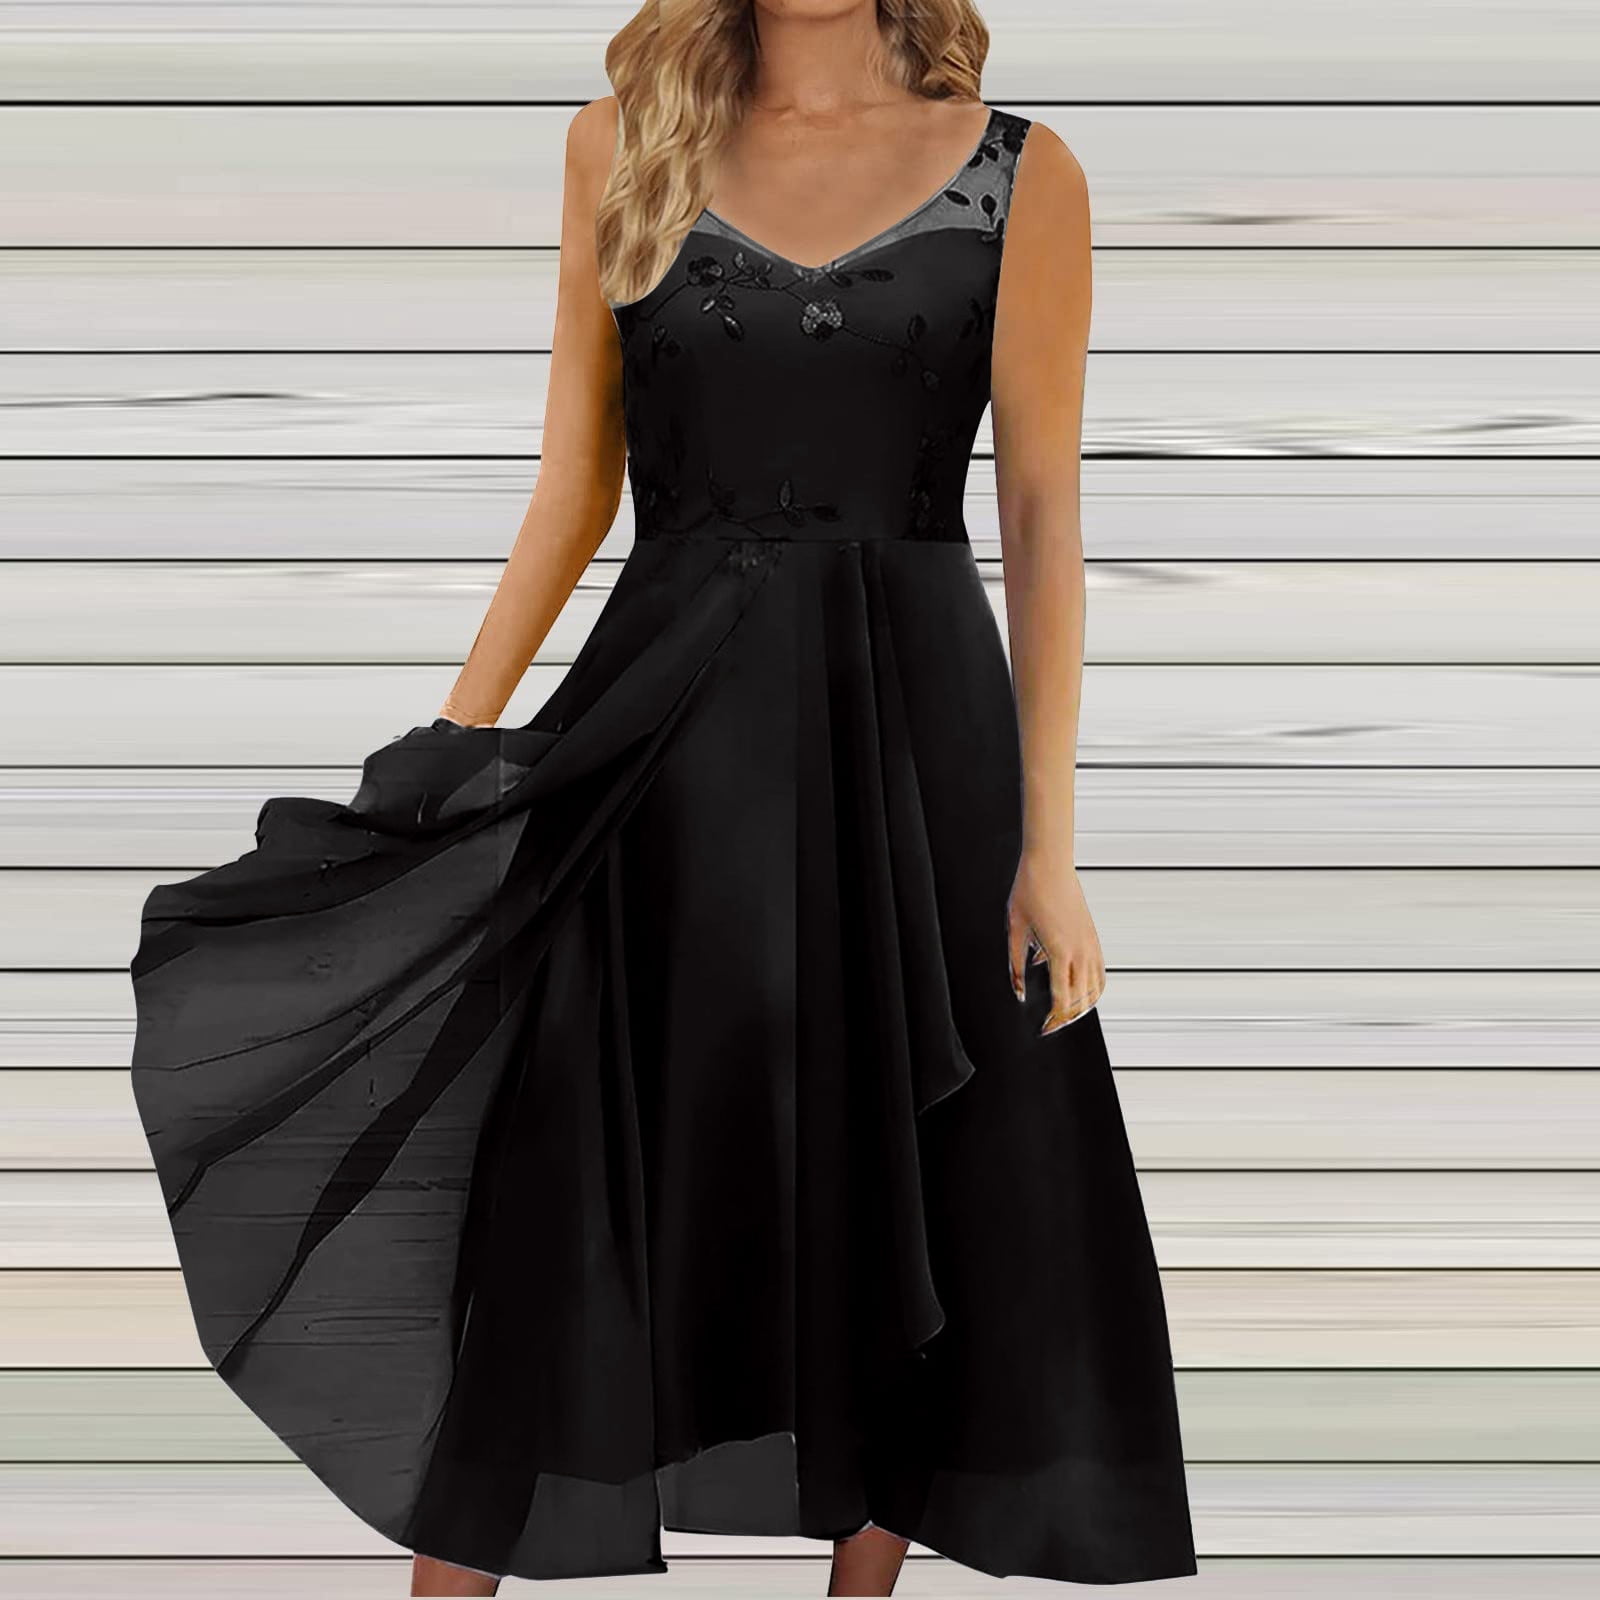 black cocktail dresses for weddings